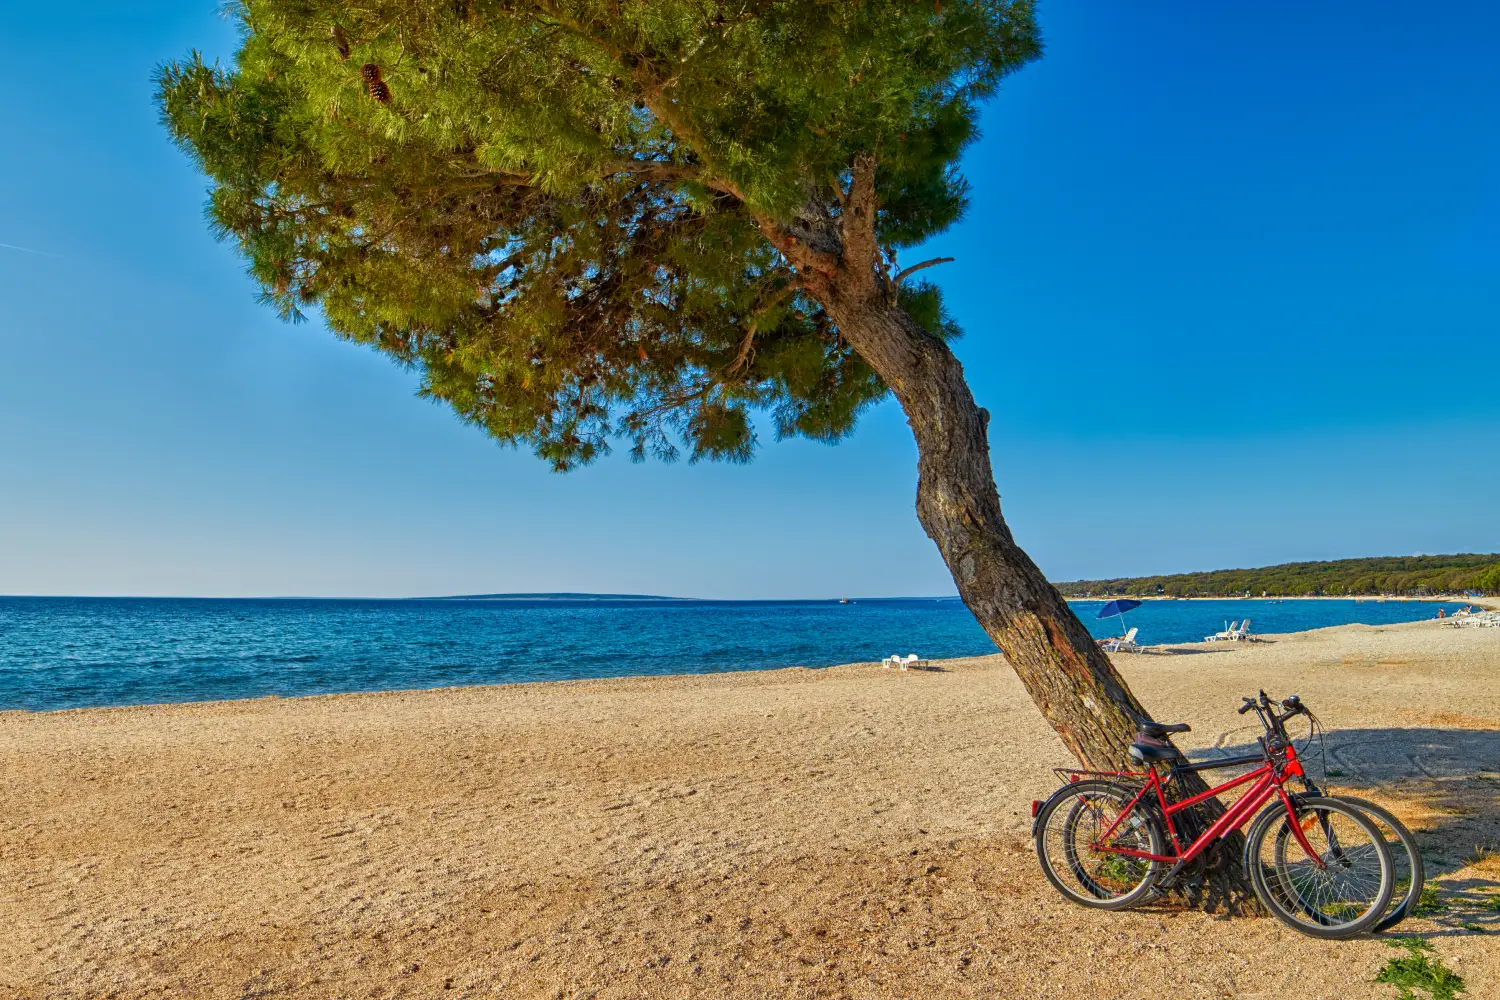 Ferry to Novalja - Bicycles under the pine tree on an empty beach of Adriatic Sea in Croatia.